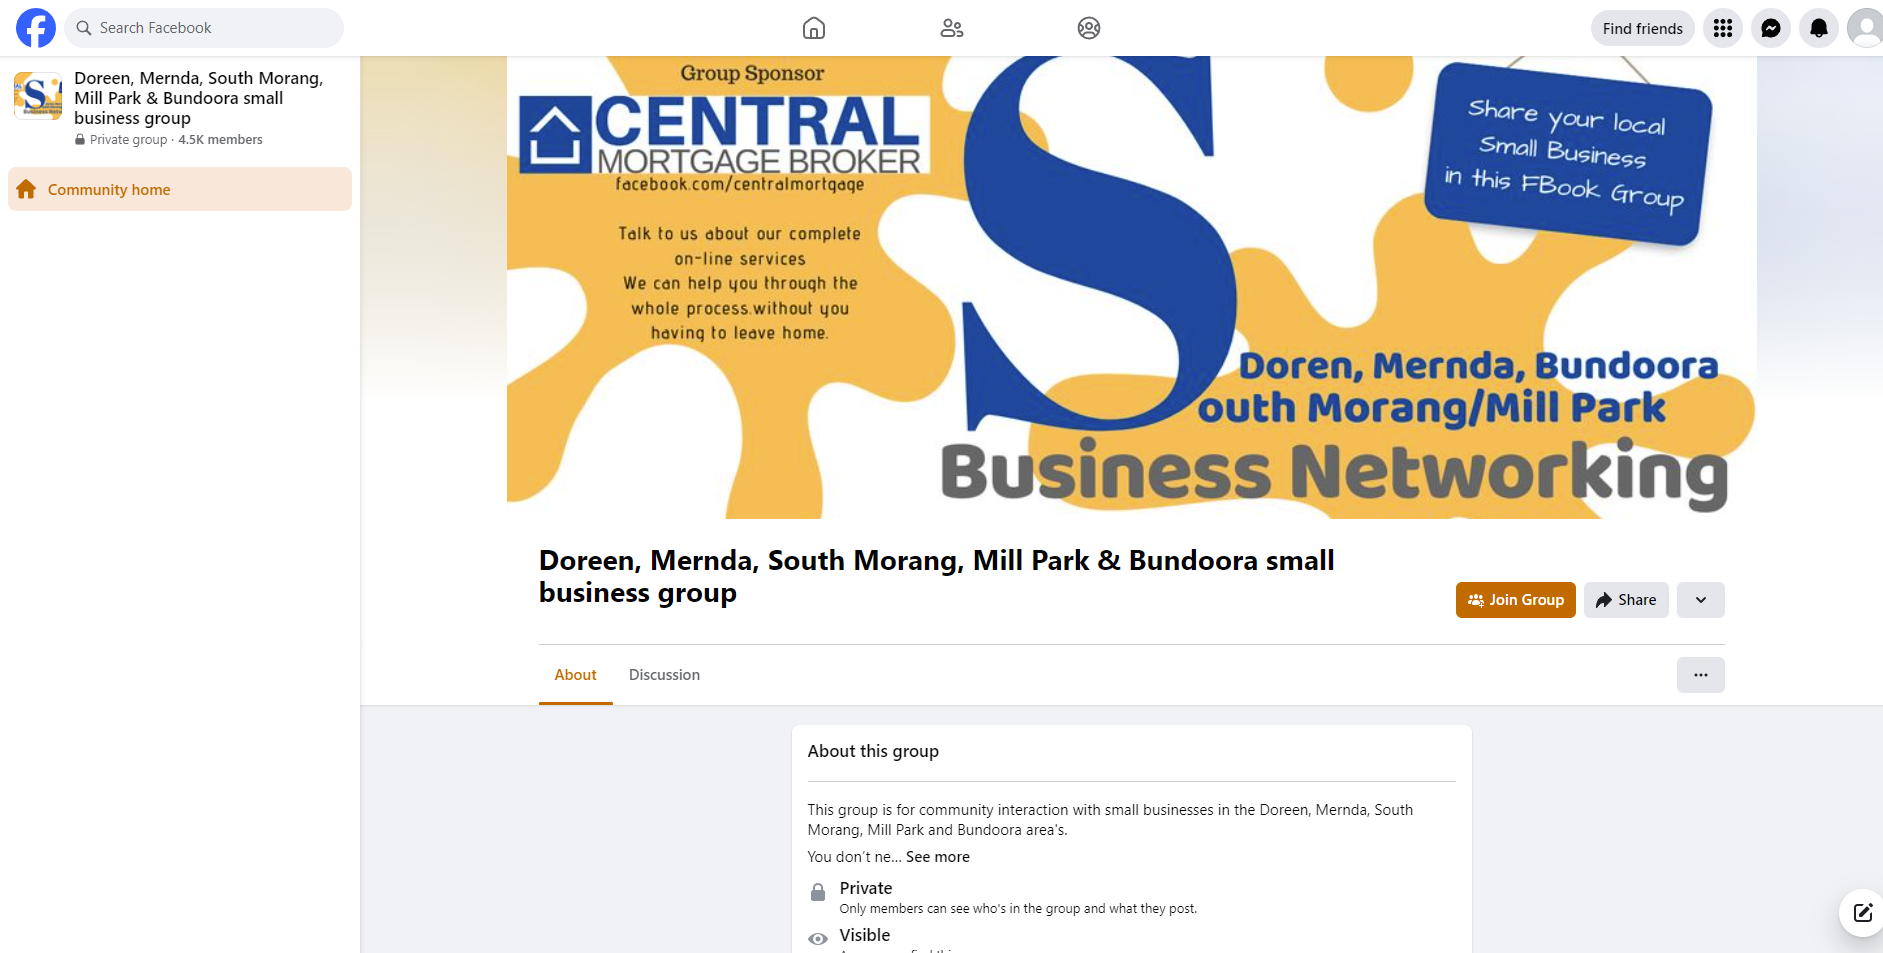 Doreen, Mernda, South Morang, Mill Park & Bundoora Small Business Group